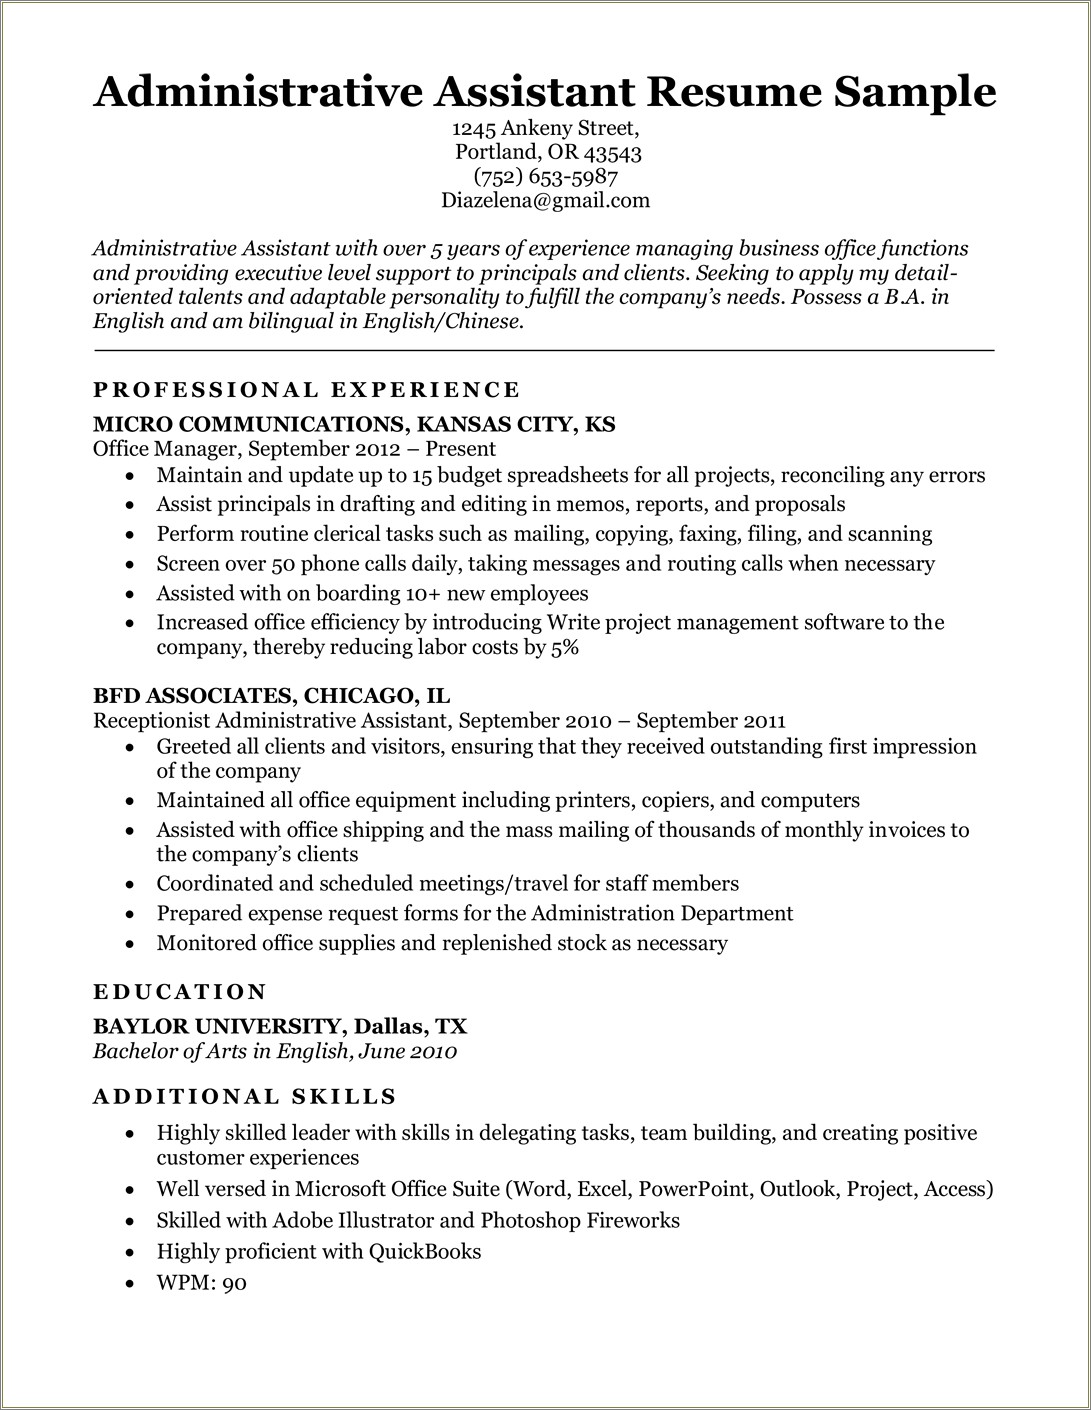 Description Of Administrative Assistant Duties For Resume